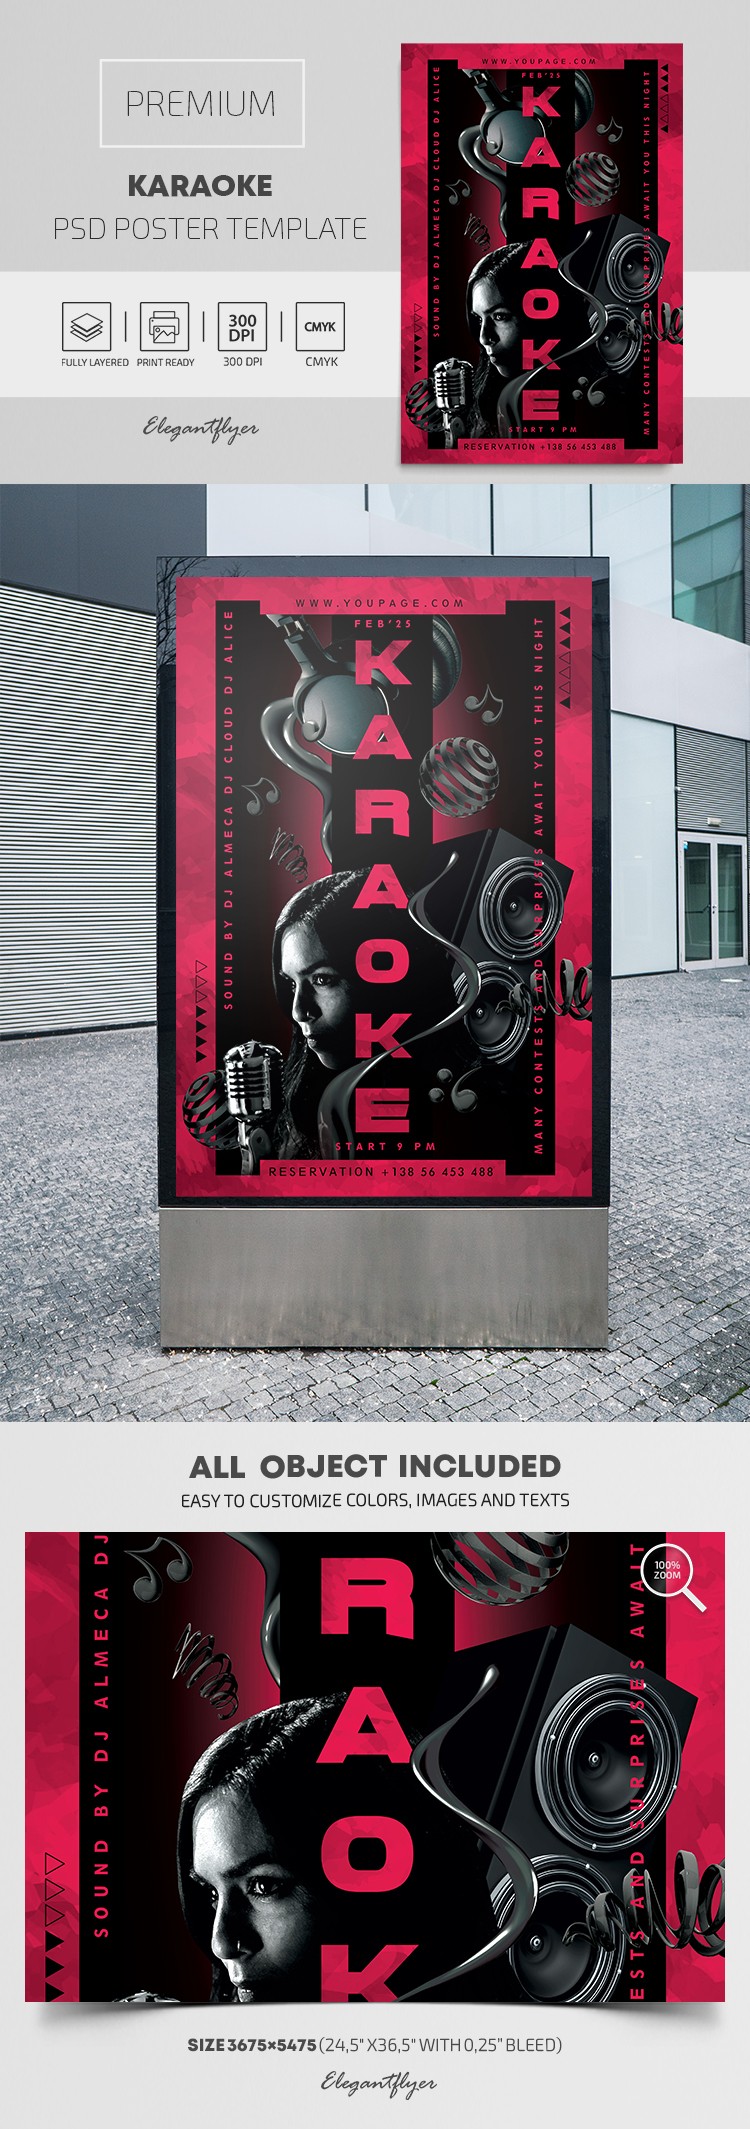 Karaoke - Premium PSD Poster Template - 10029360 | by ElegantFlyer